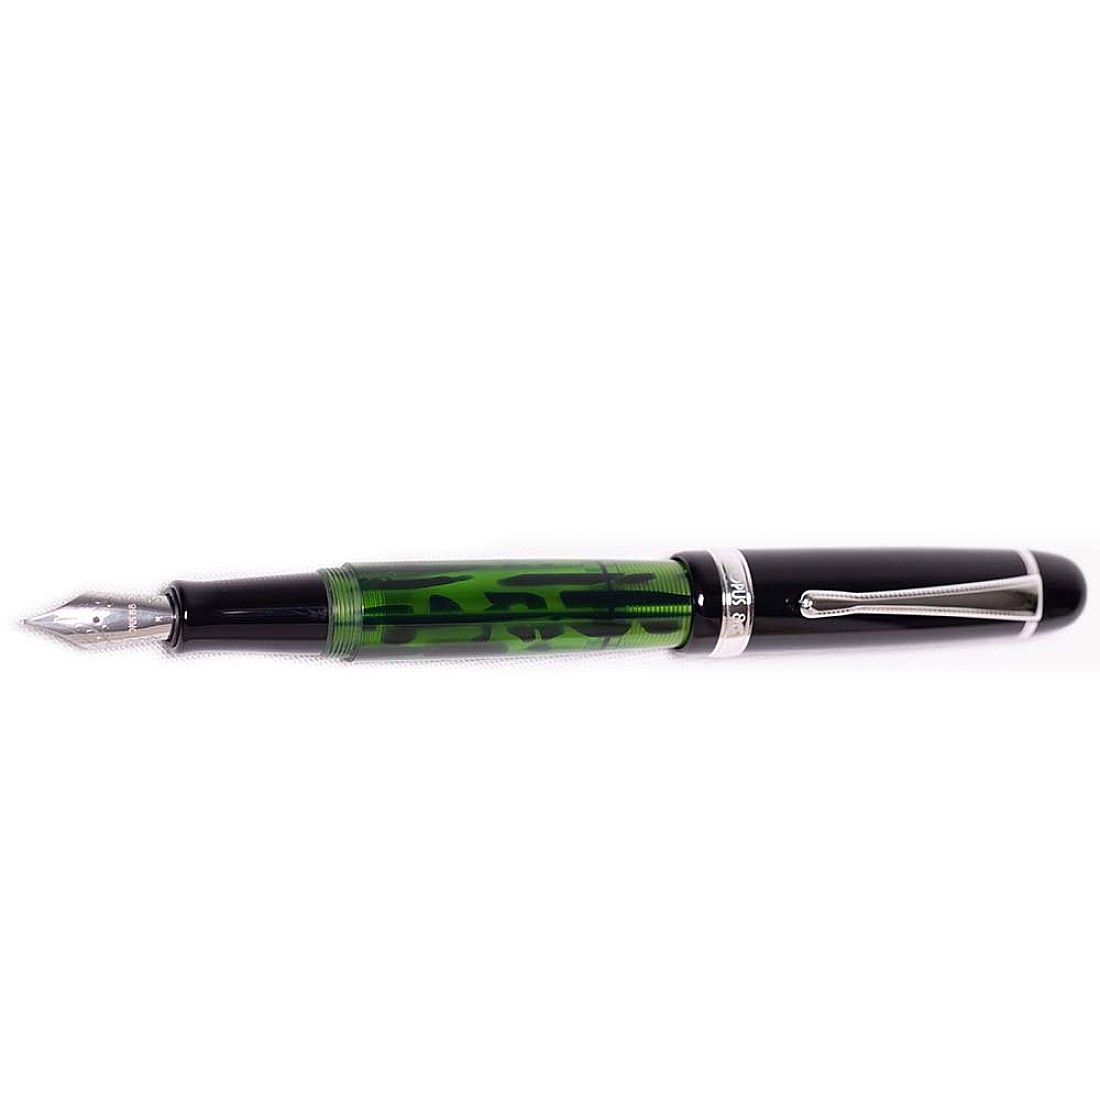 Opus 88 Jazz Green Fountain pen